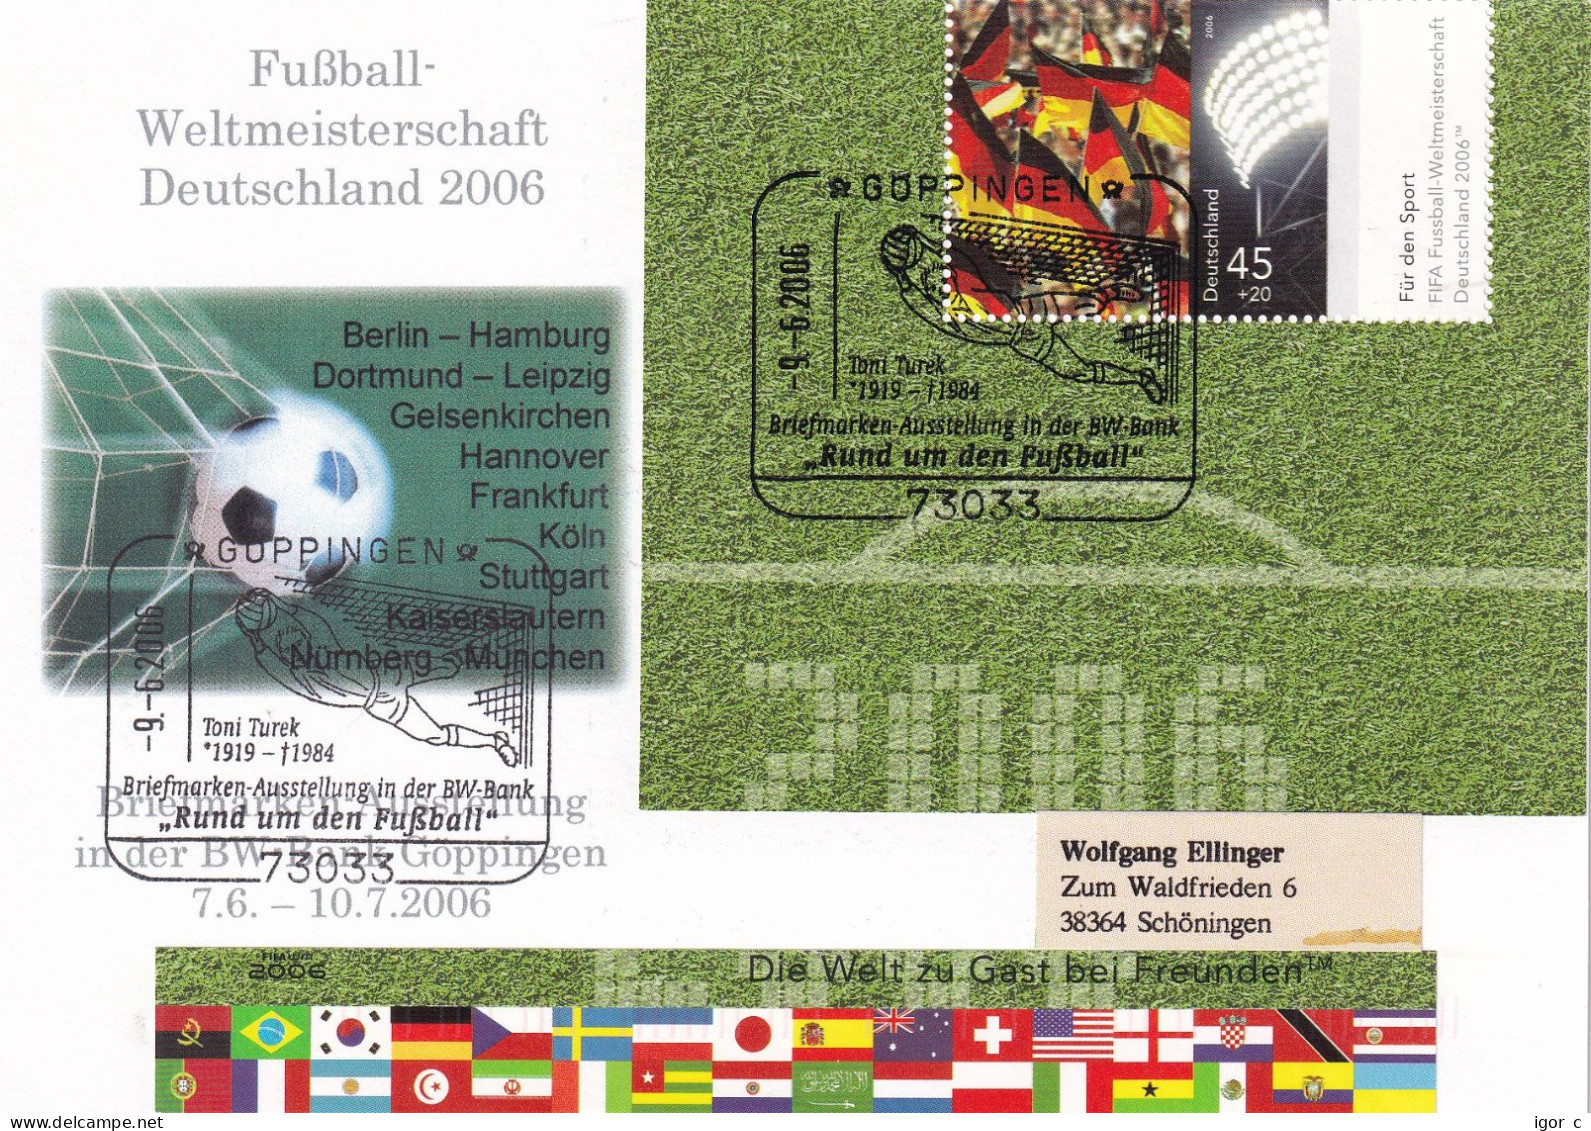 Germany 2006 Card; Football Fussball Soccer Calcio; FIFA World Cup 1954 2006; Toni Turek; Wunder Von Bern; Flags: Host - 1954 – Switzerland